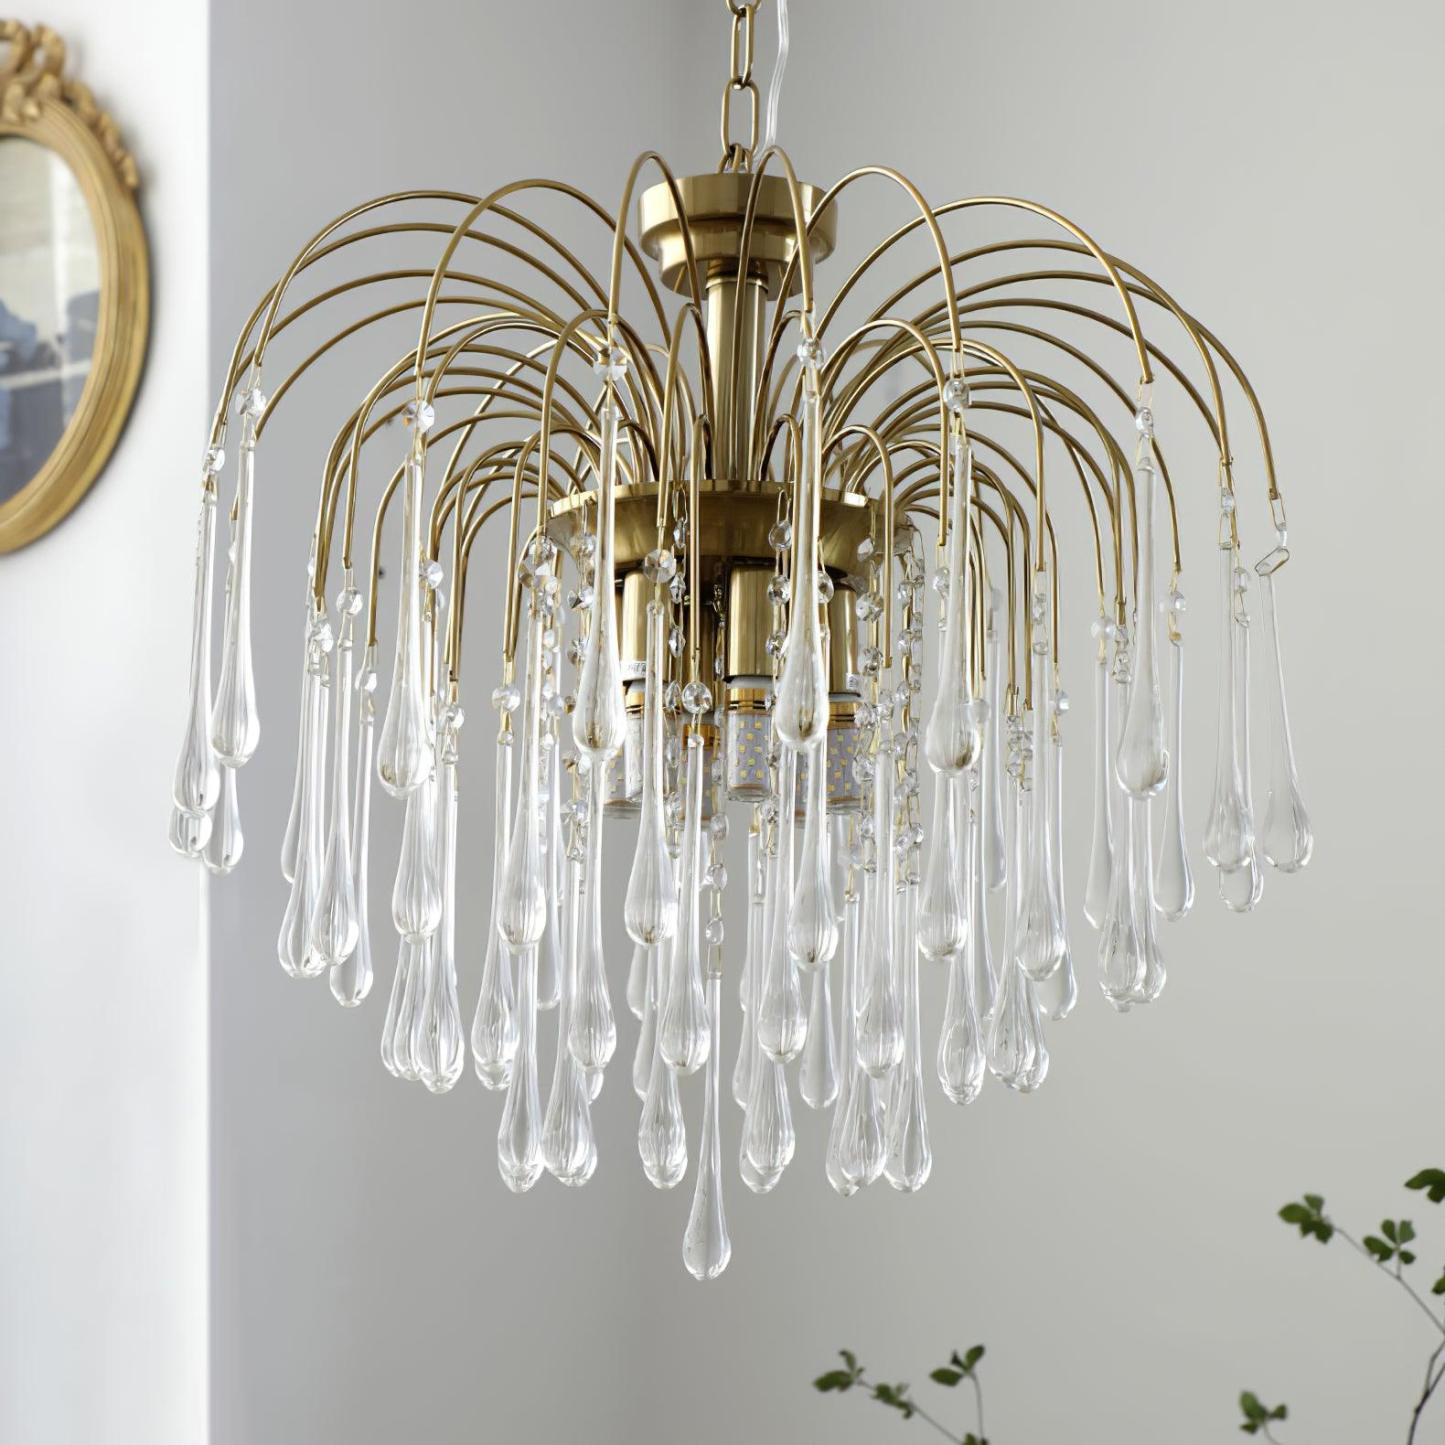 Italian Retro Water Drop French Snot Lamp Light Luxury Glass Chandelier